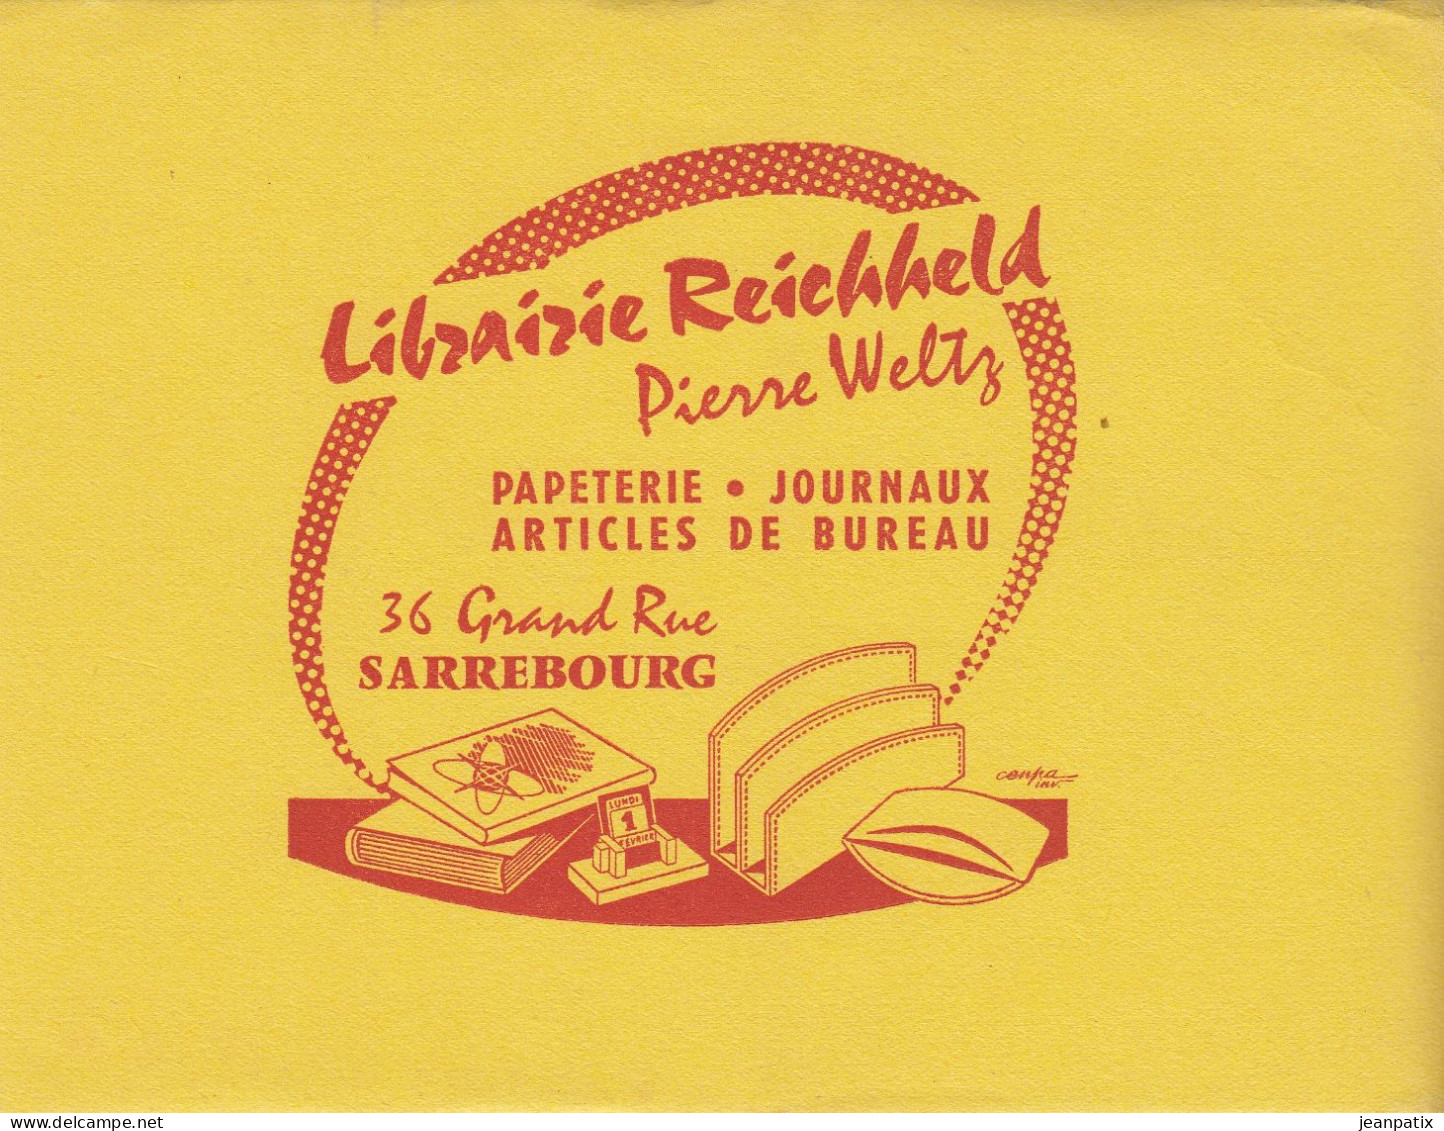 BUVARD & BLOTTER - Librairie REICHHELD - Pierre Weltz - SARREBOURG (Moselle) - Cocoa & Chocolat